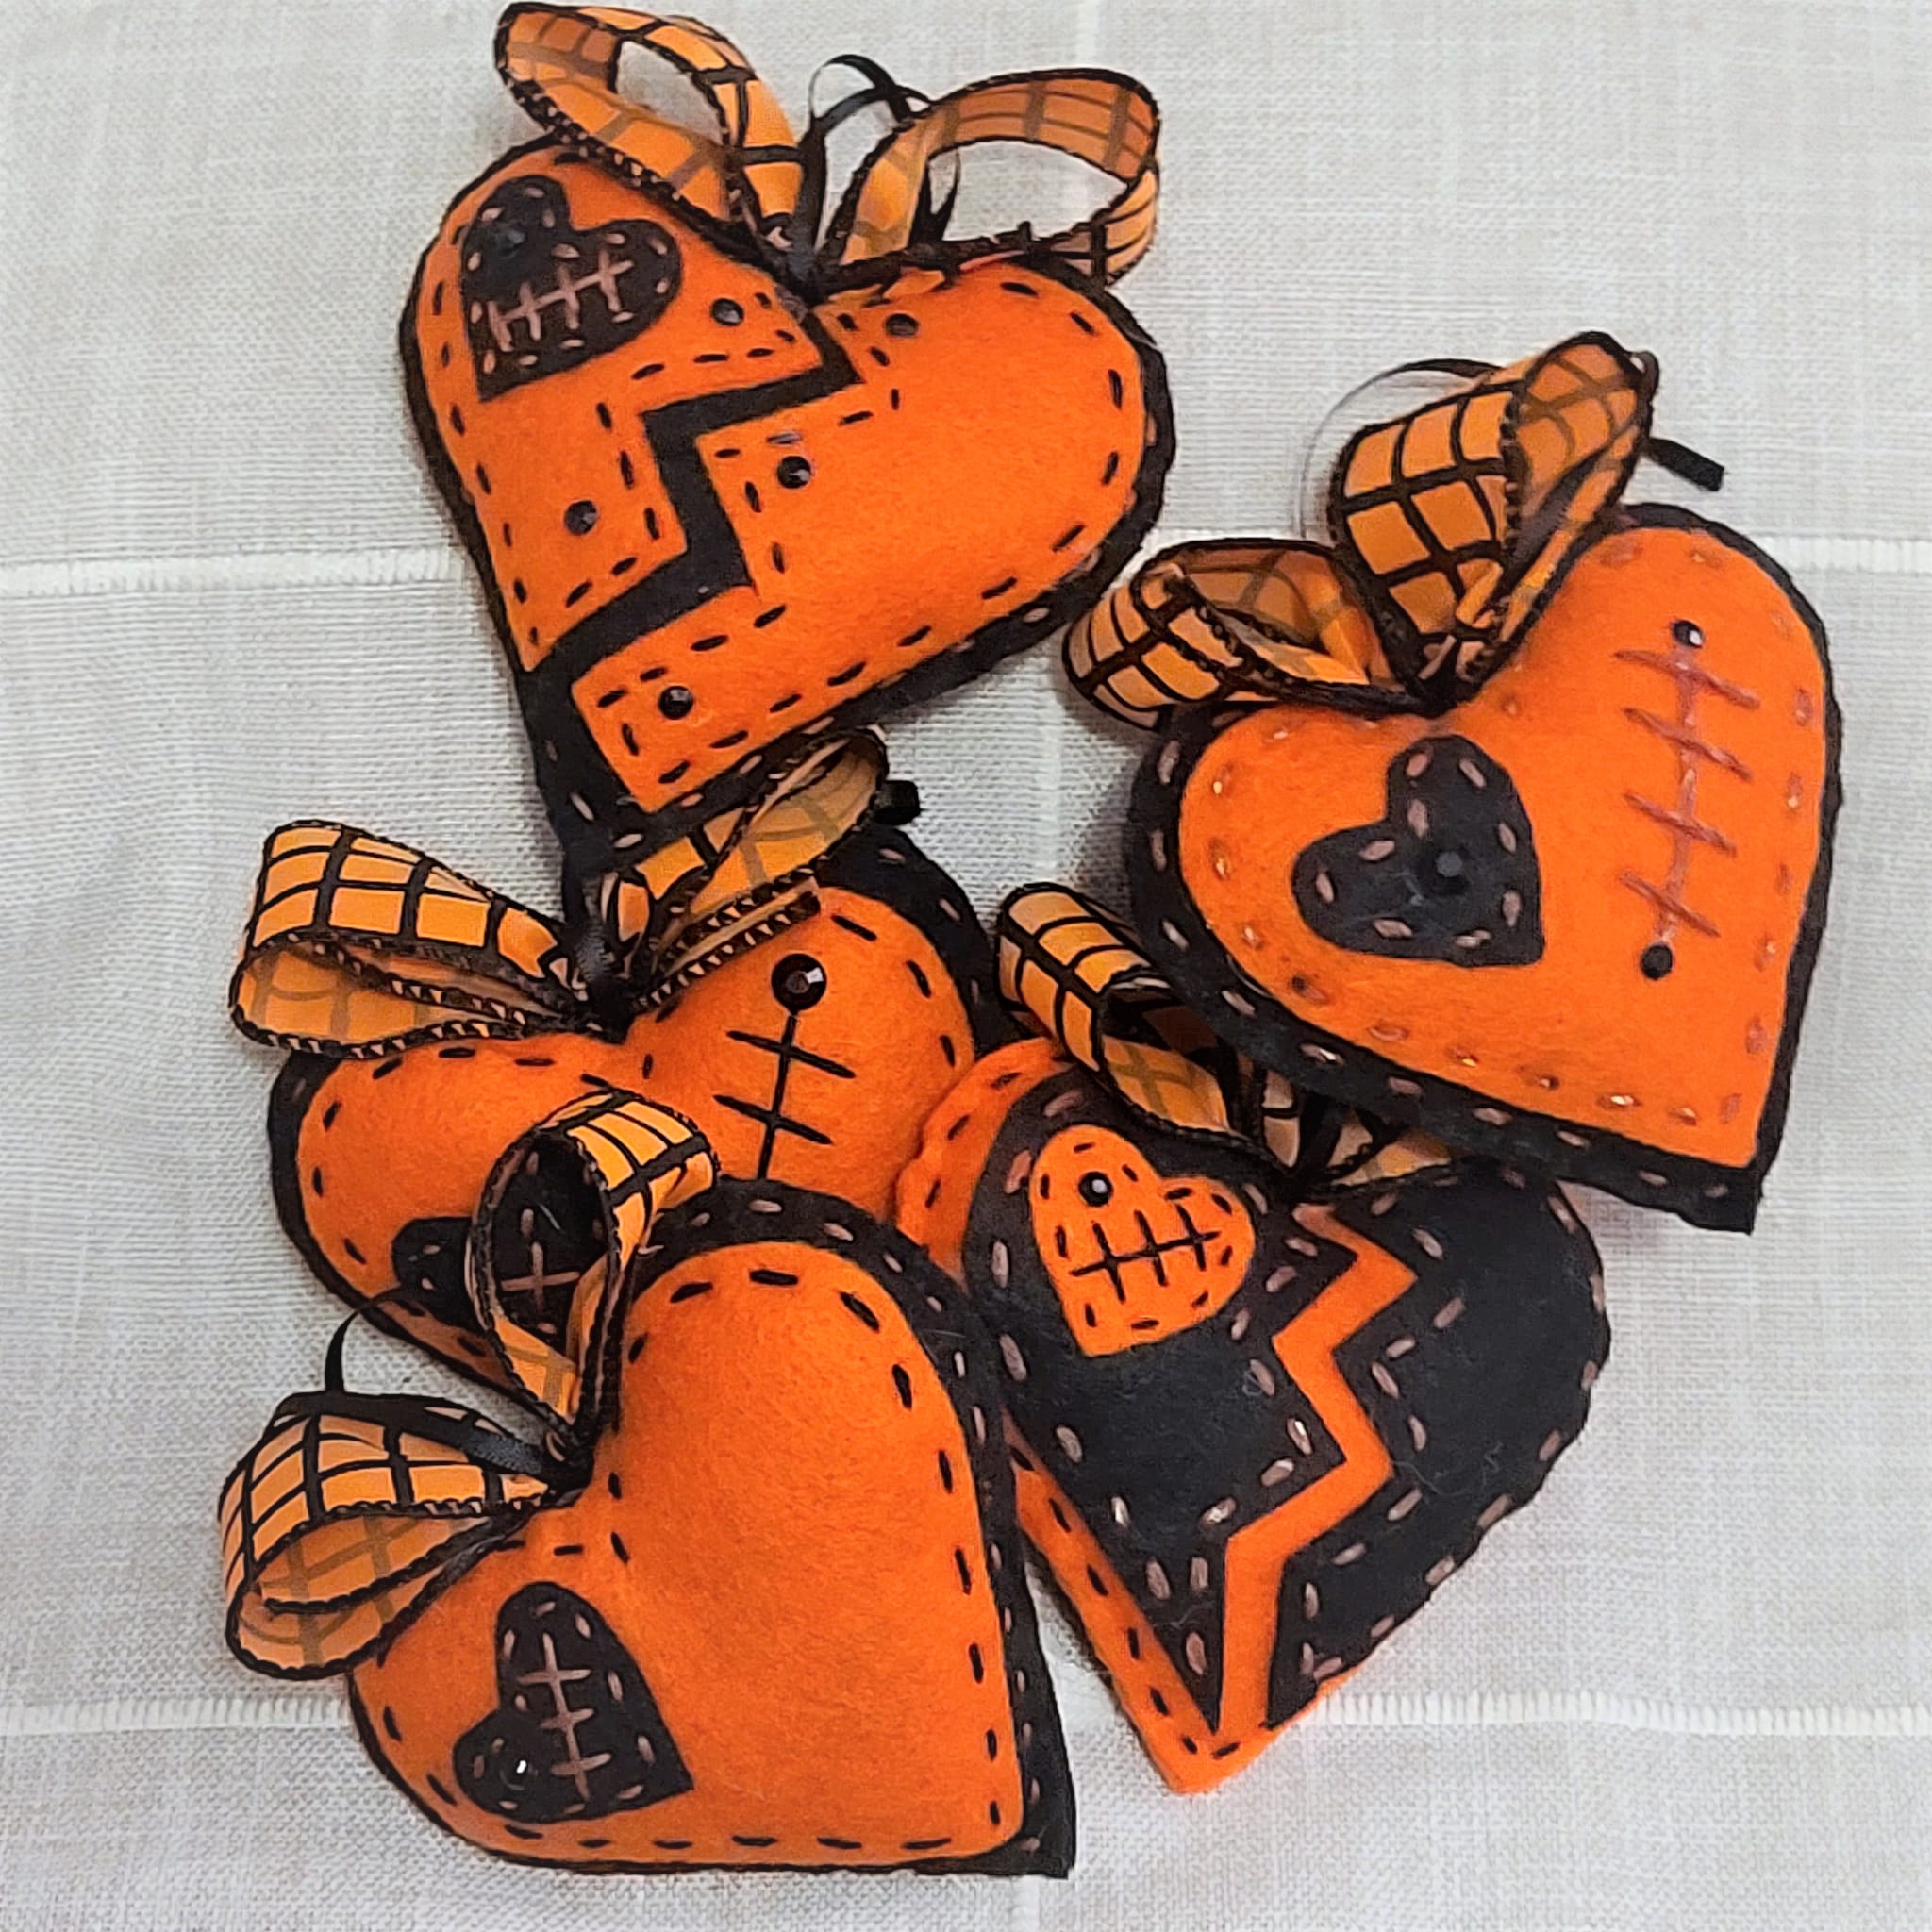 Halloween felt broken heart ornament 2 sided orange and black